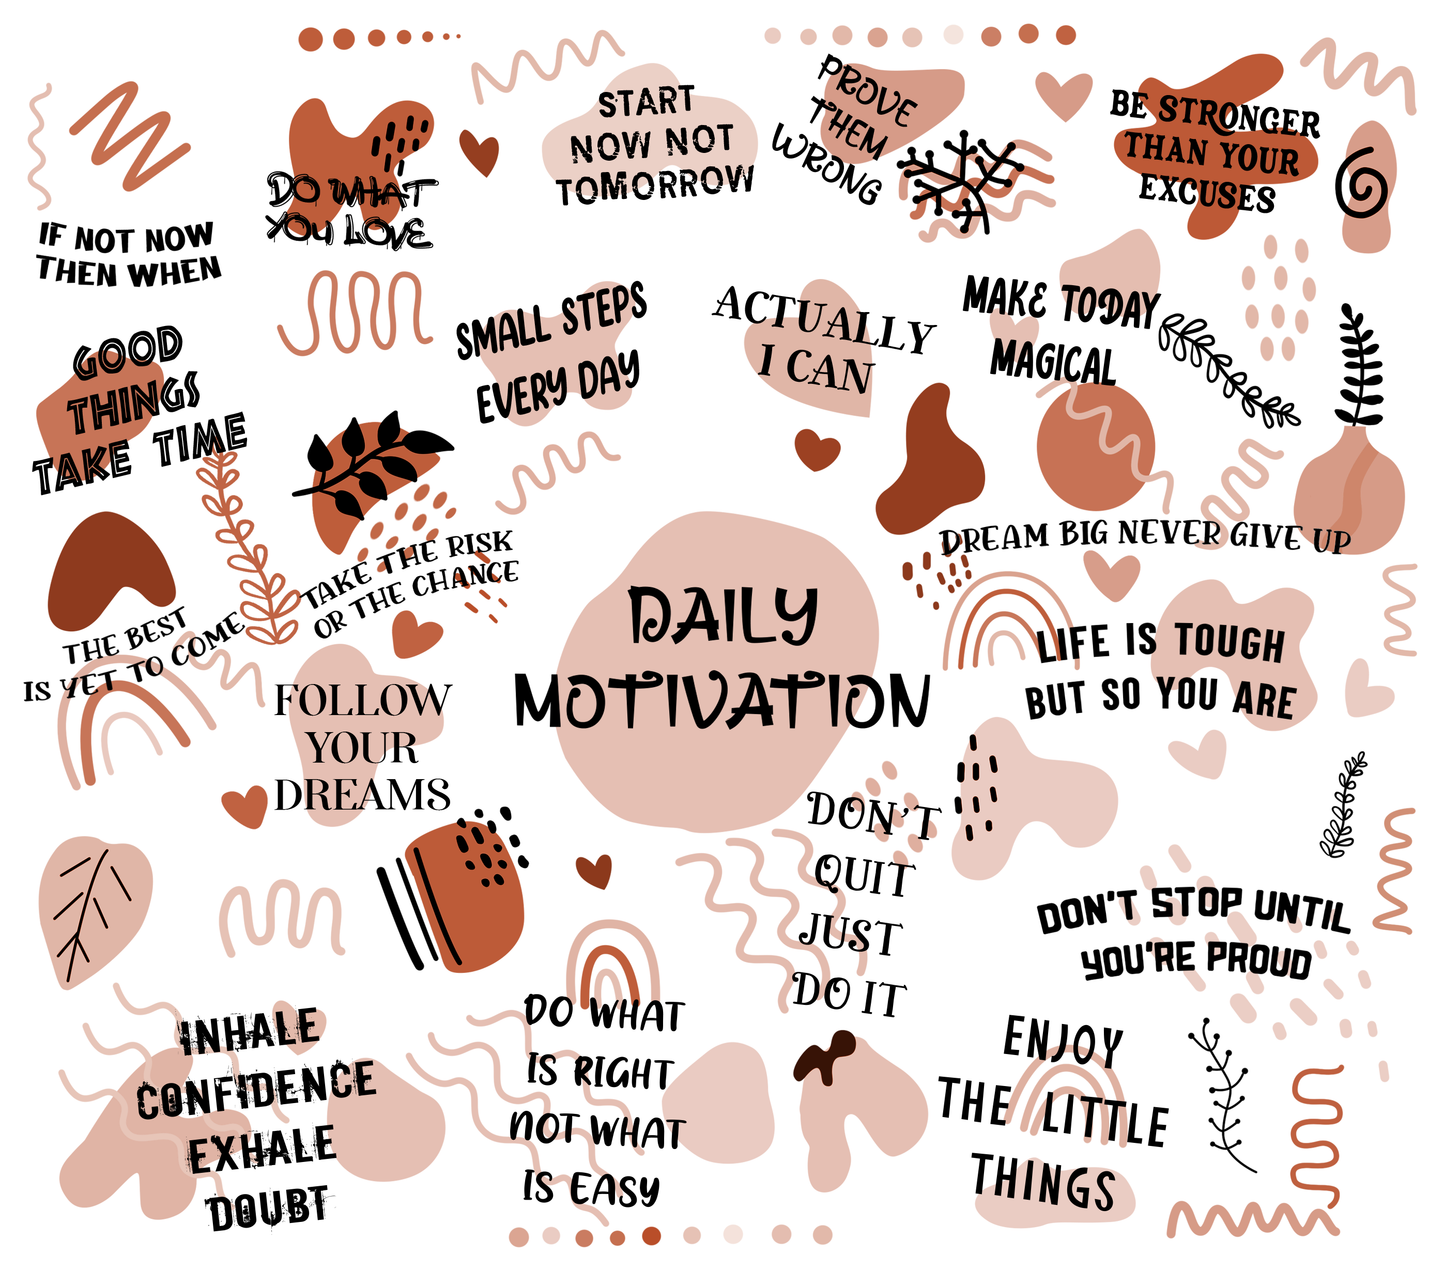 Daily Motivation - 20 Oz Sublimation Transfer